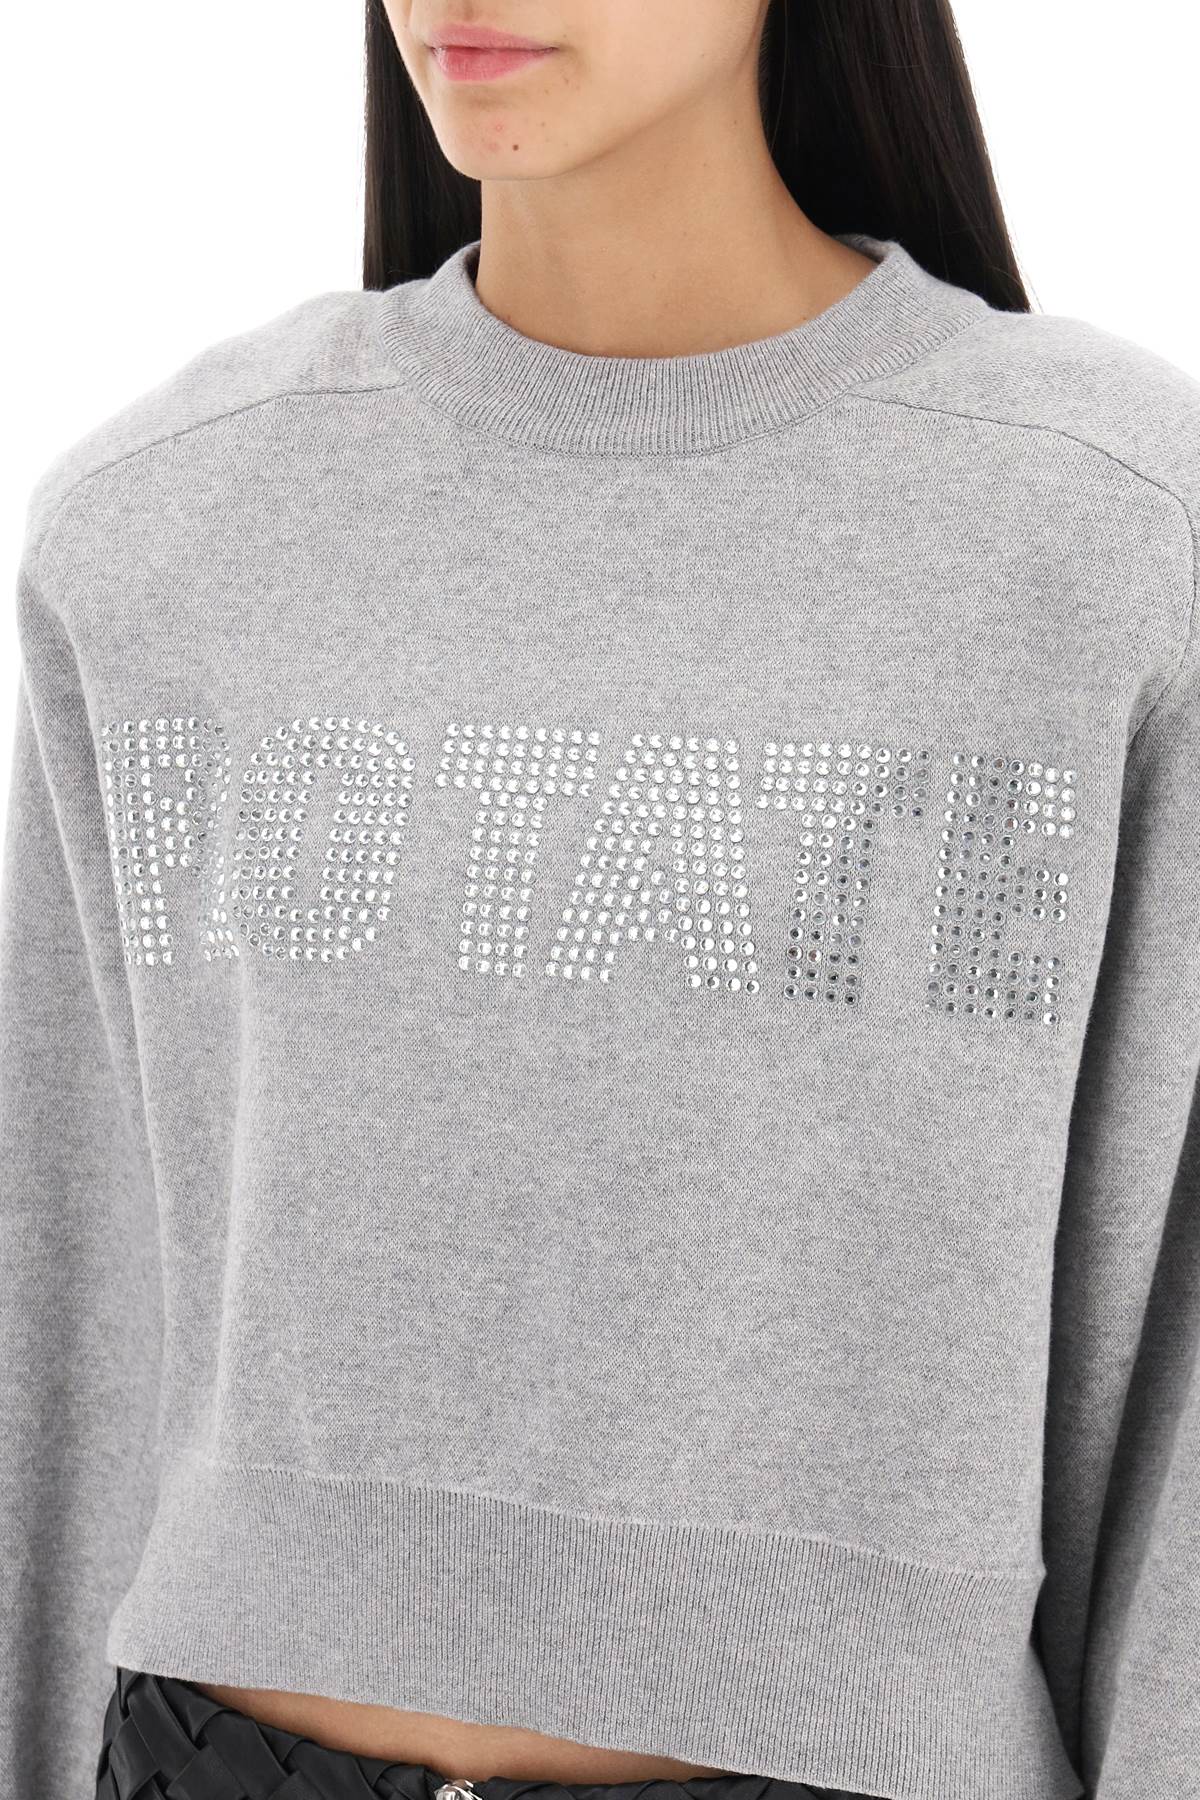 Rotate cropped sweater with rhinestone-studded logo-3